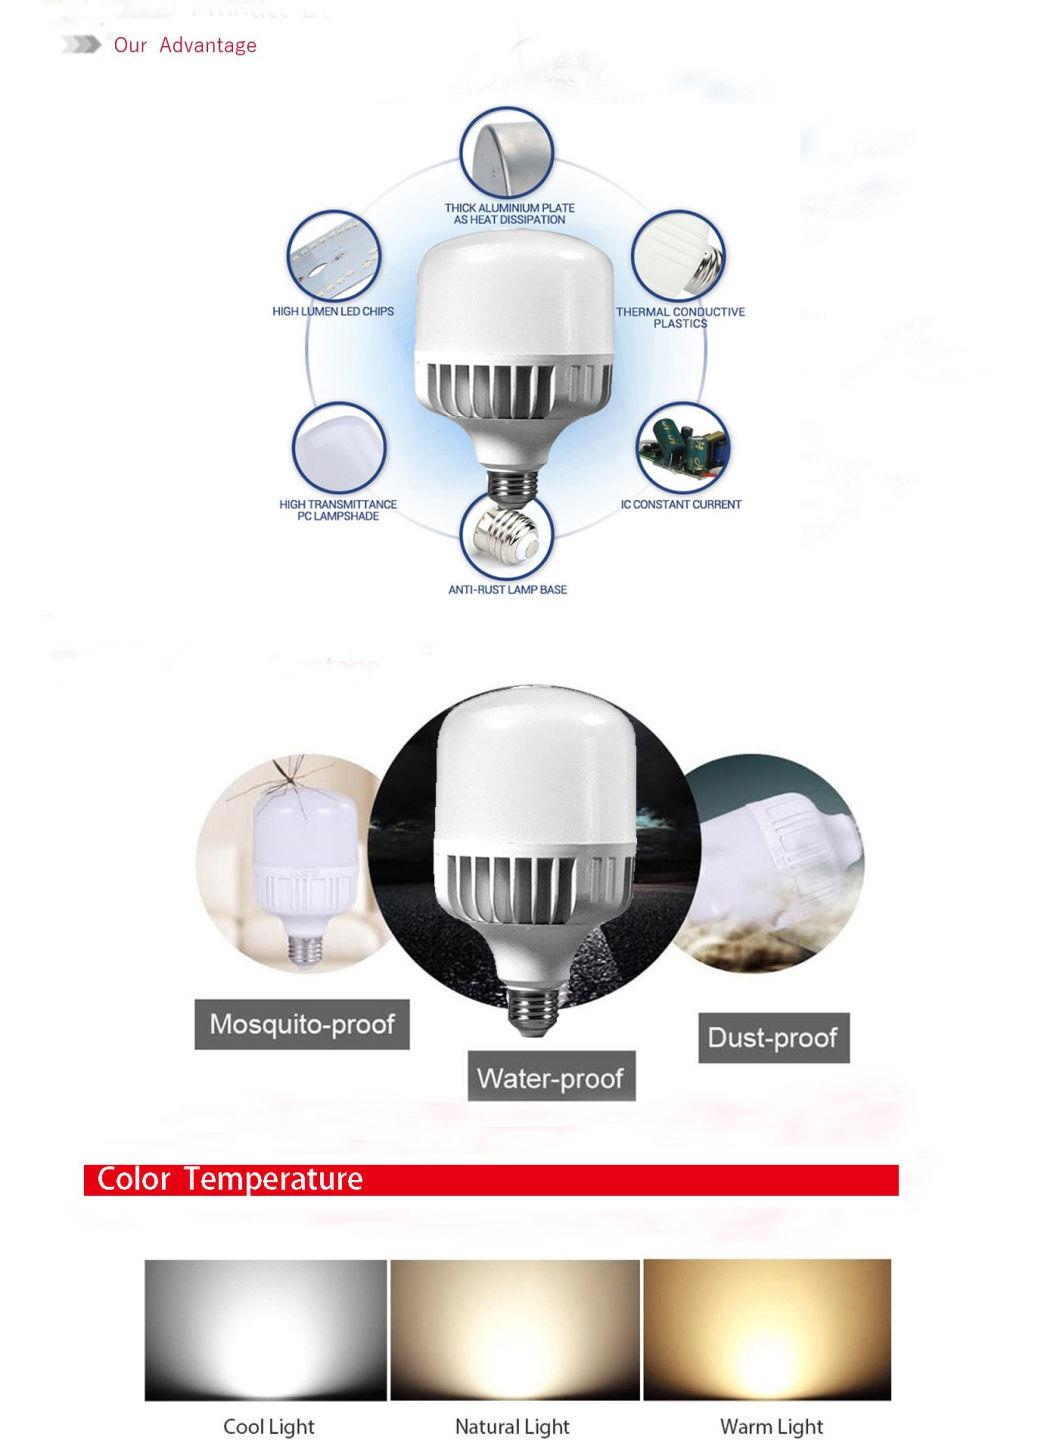 T120 40W/50W High Power Lumen Die-Casting Aluminum LED Bulb Lamp